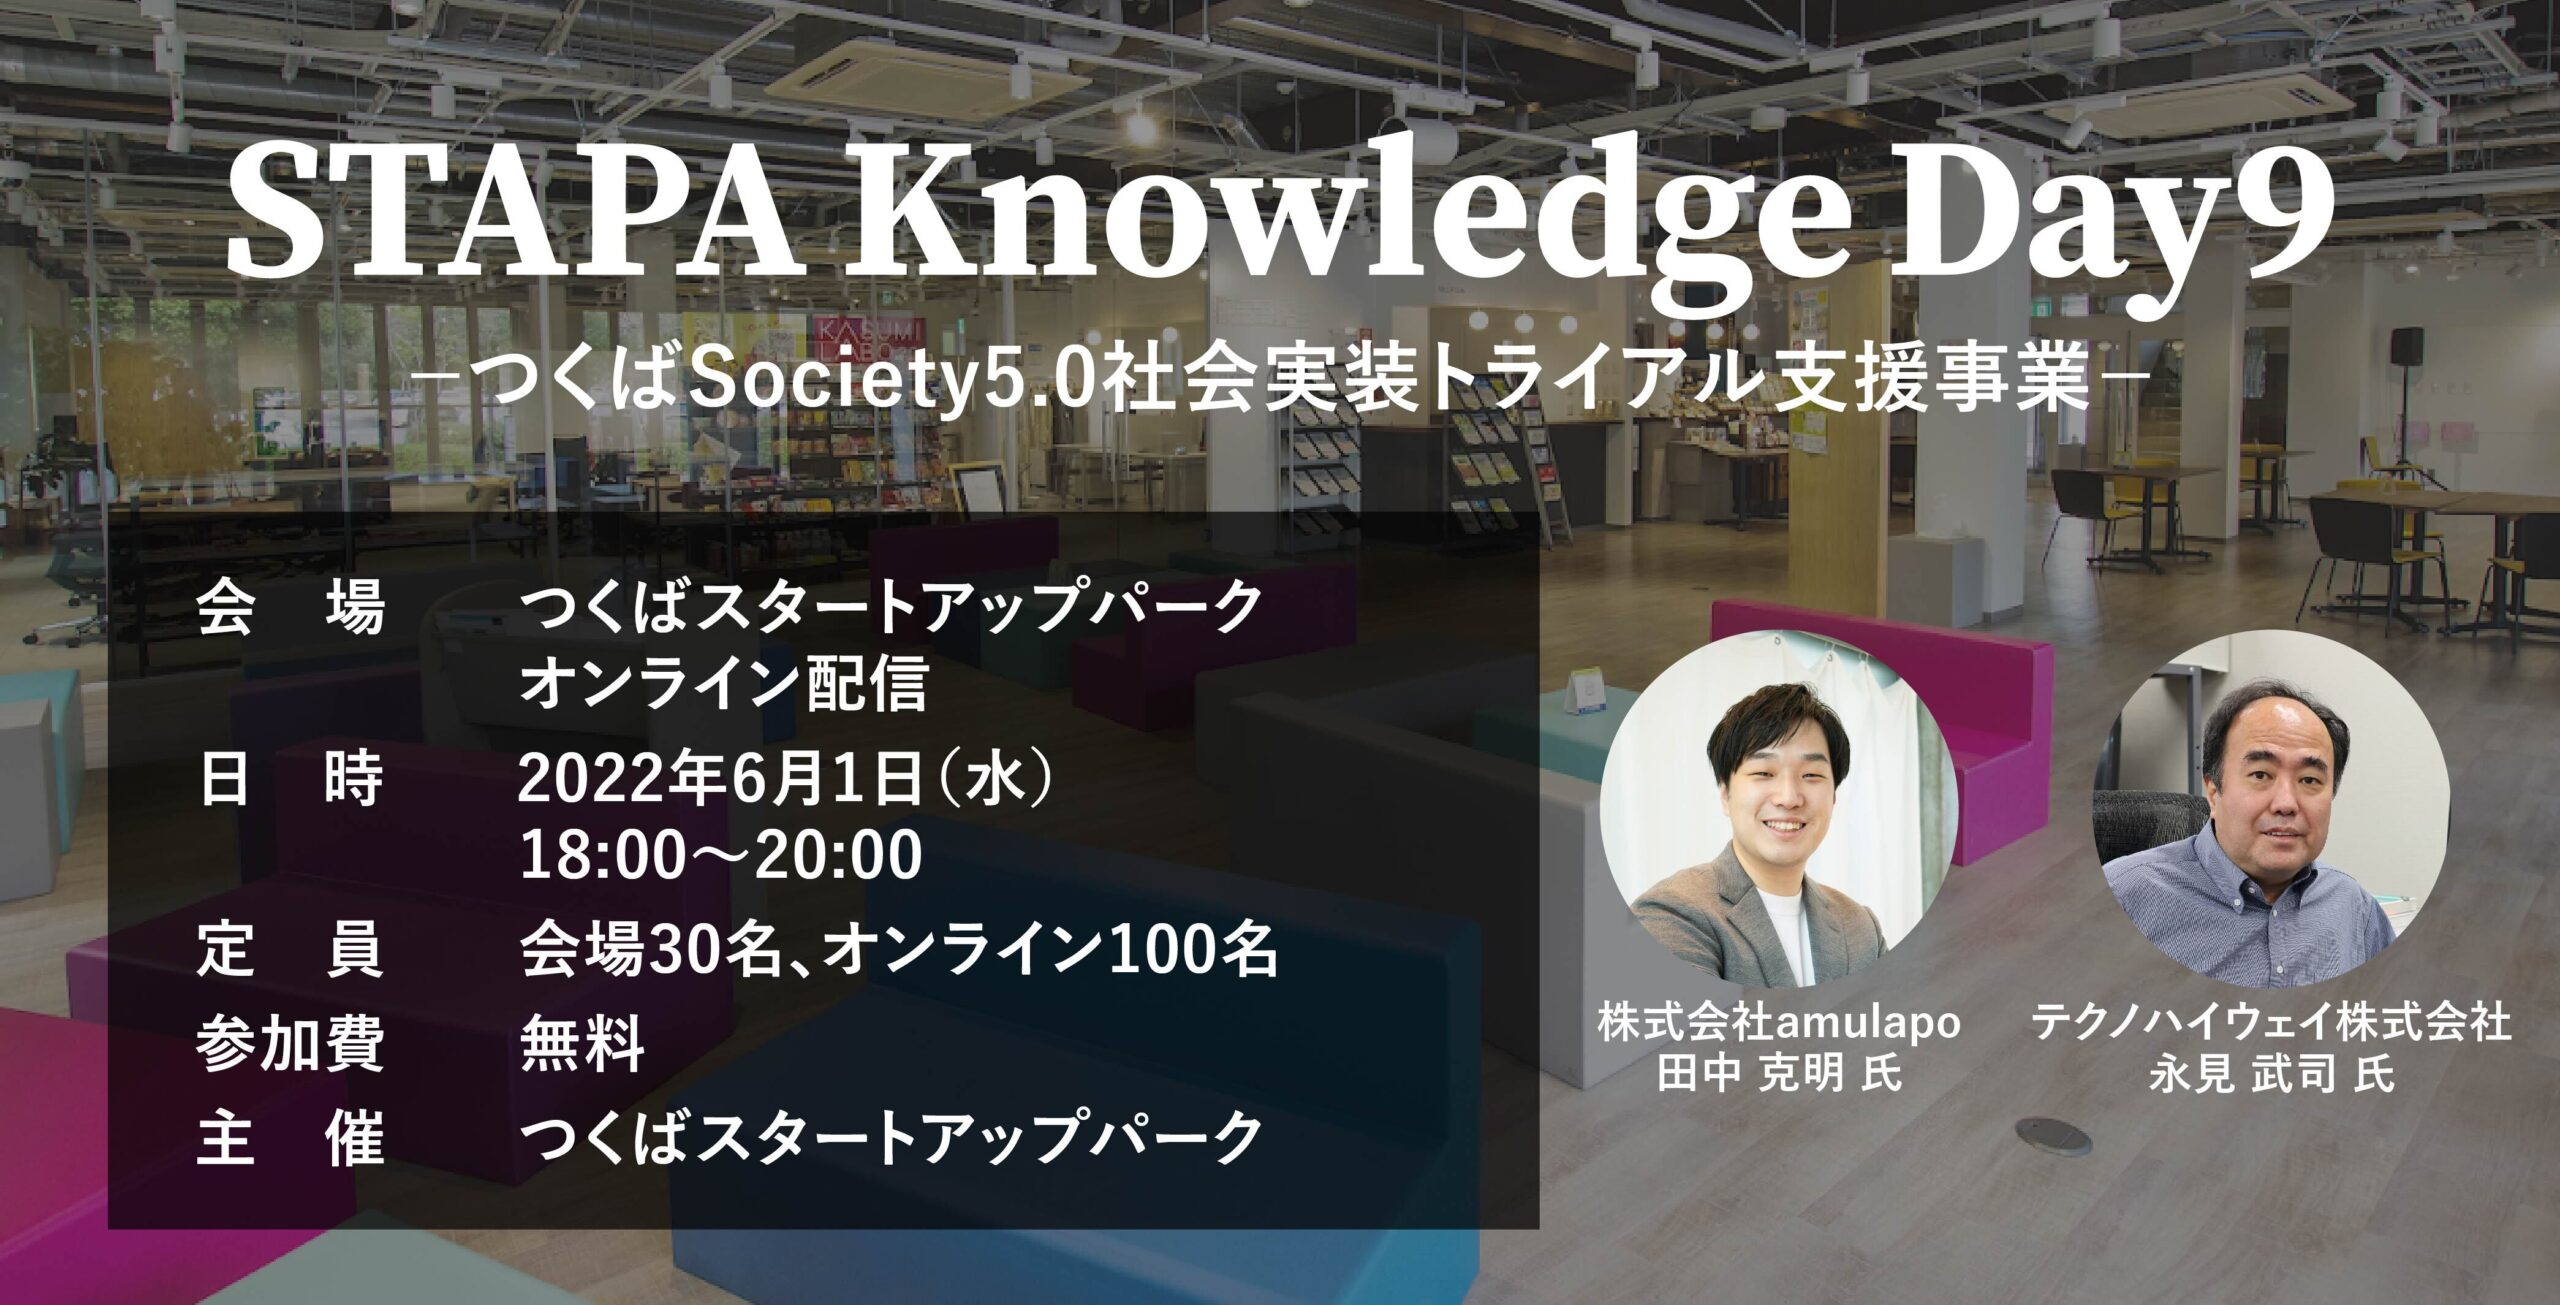 STAPA Knowledge Day9 －つくばSociety5.0社会実装トライアル支援事業－